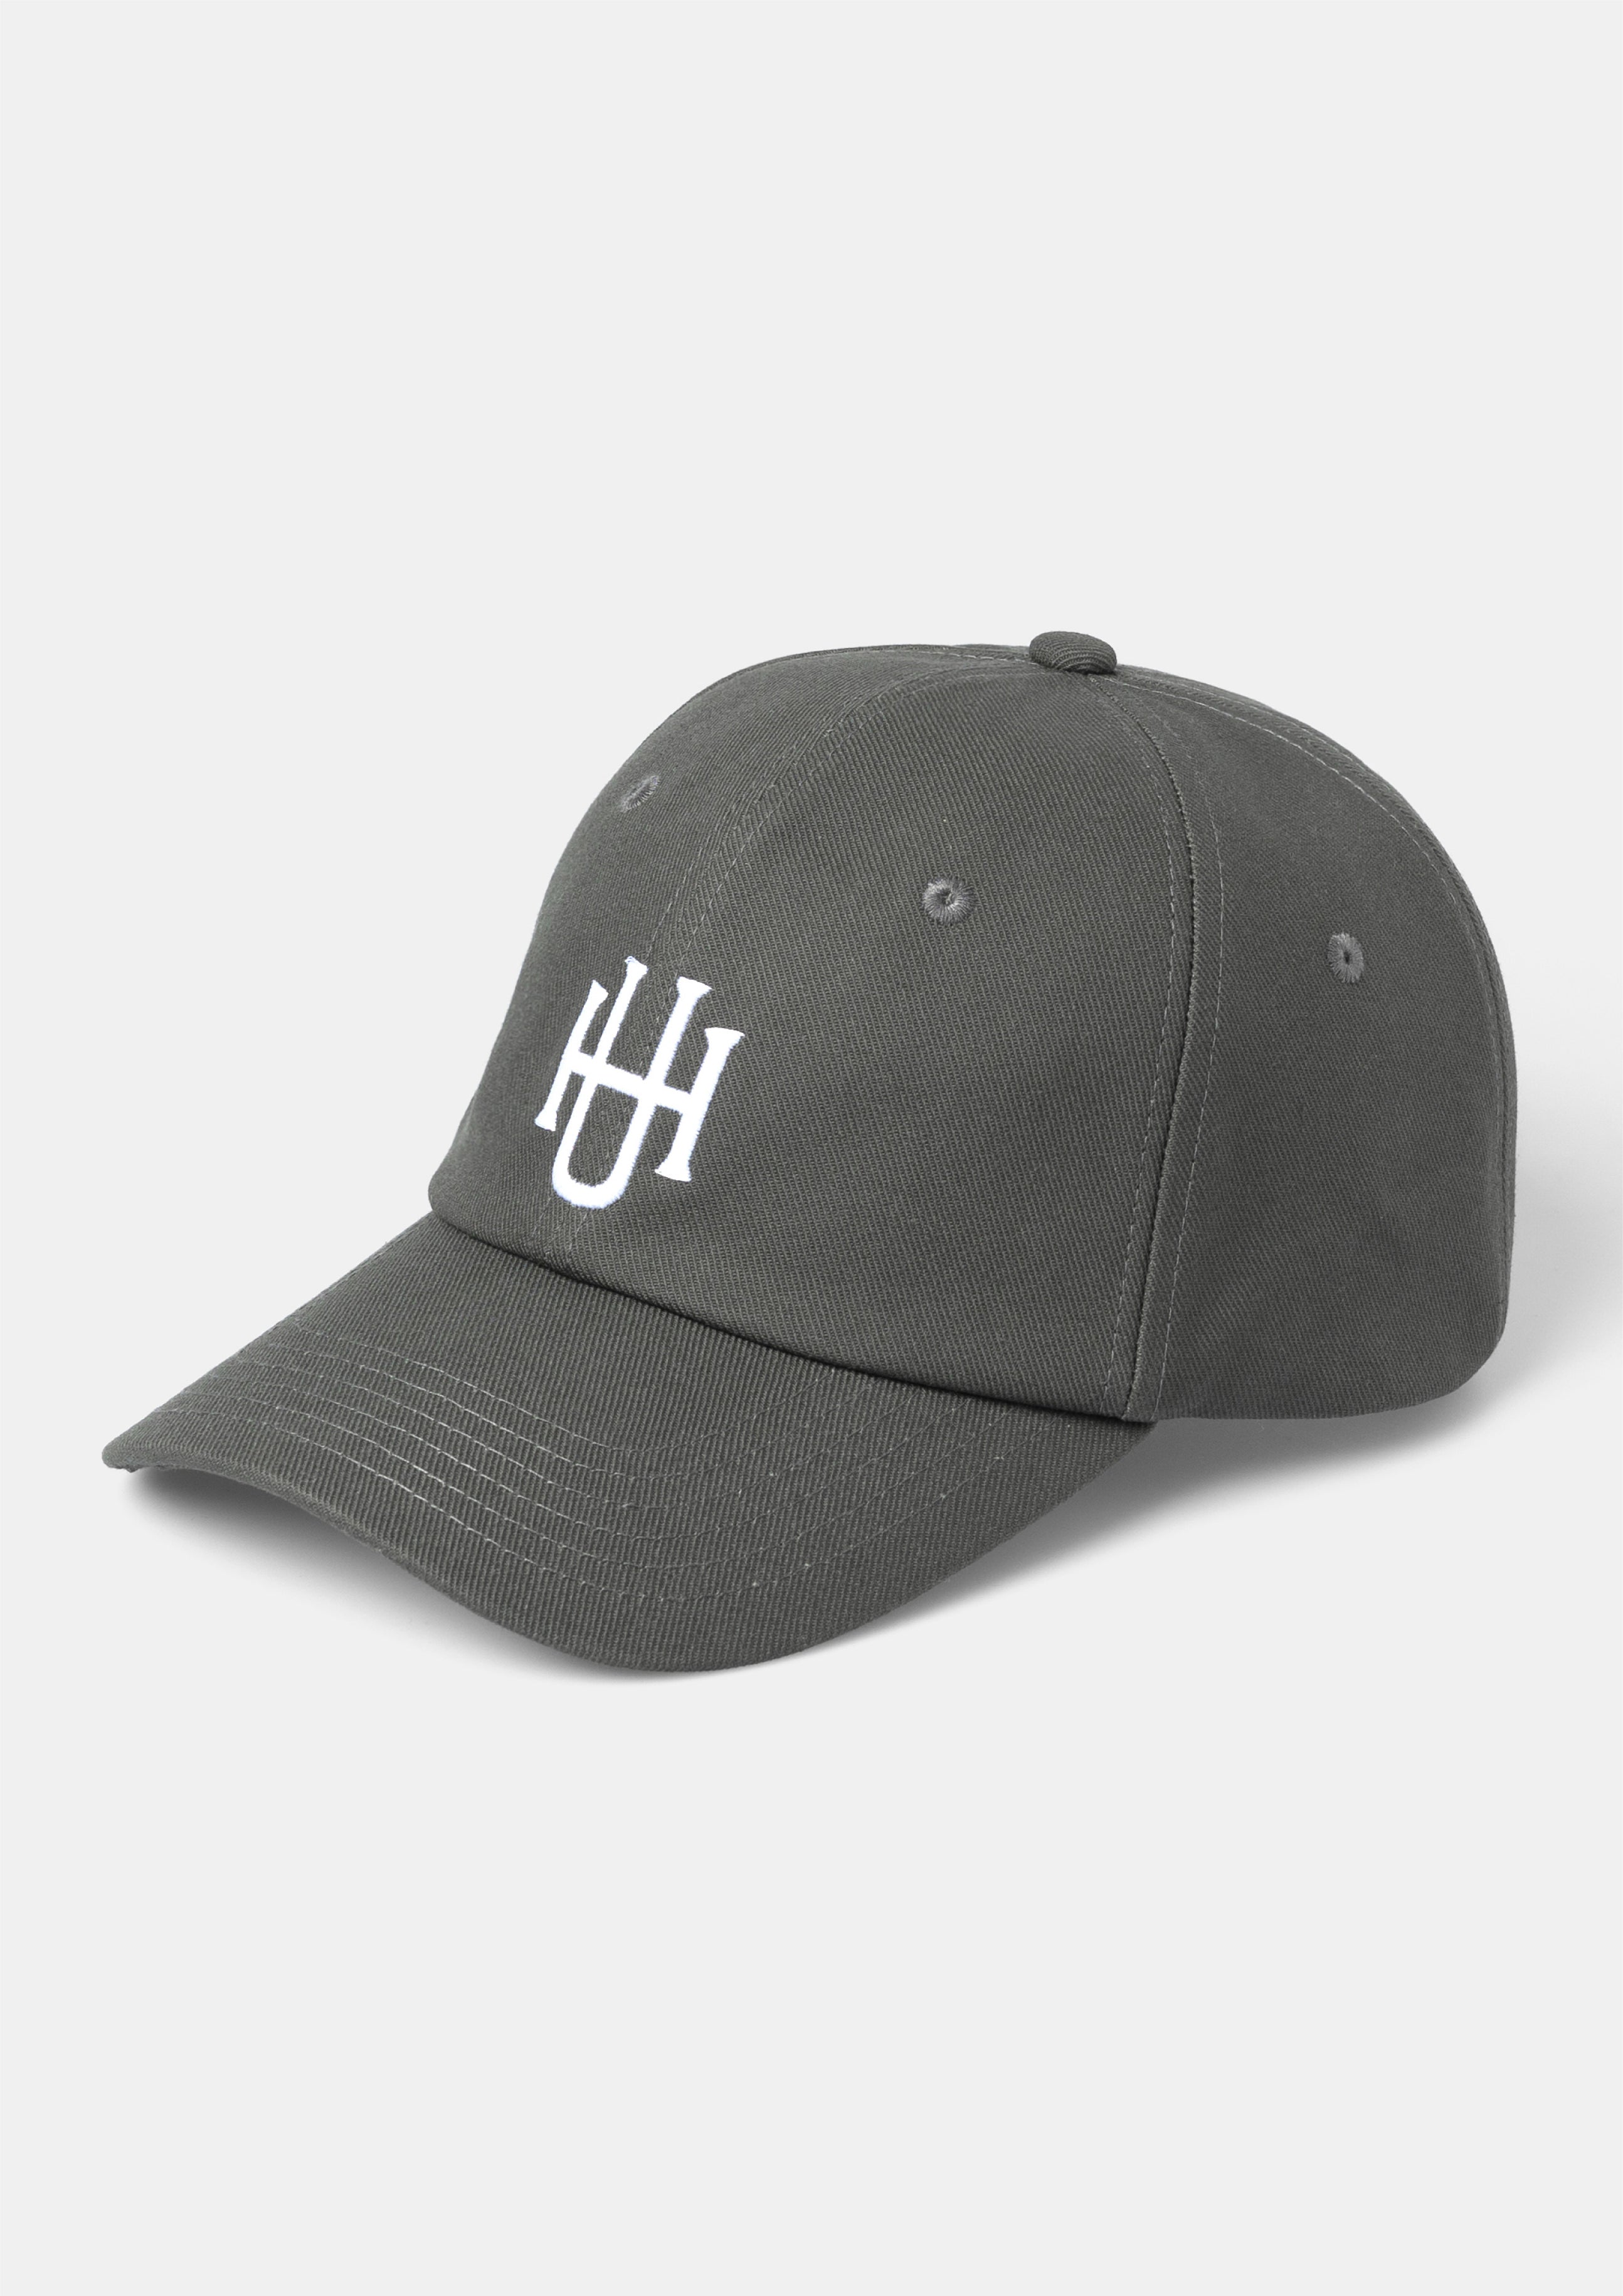 UNNAMED HEADWEAR DEEP CAP ディープキャップ 大きいサイズの帽子